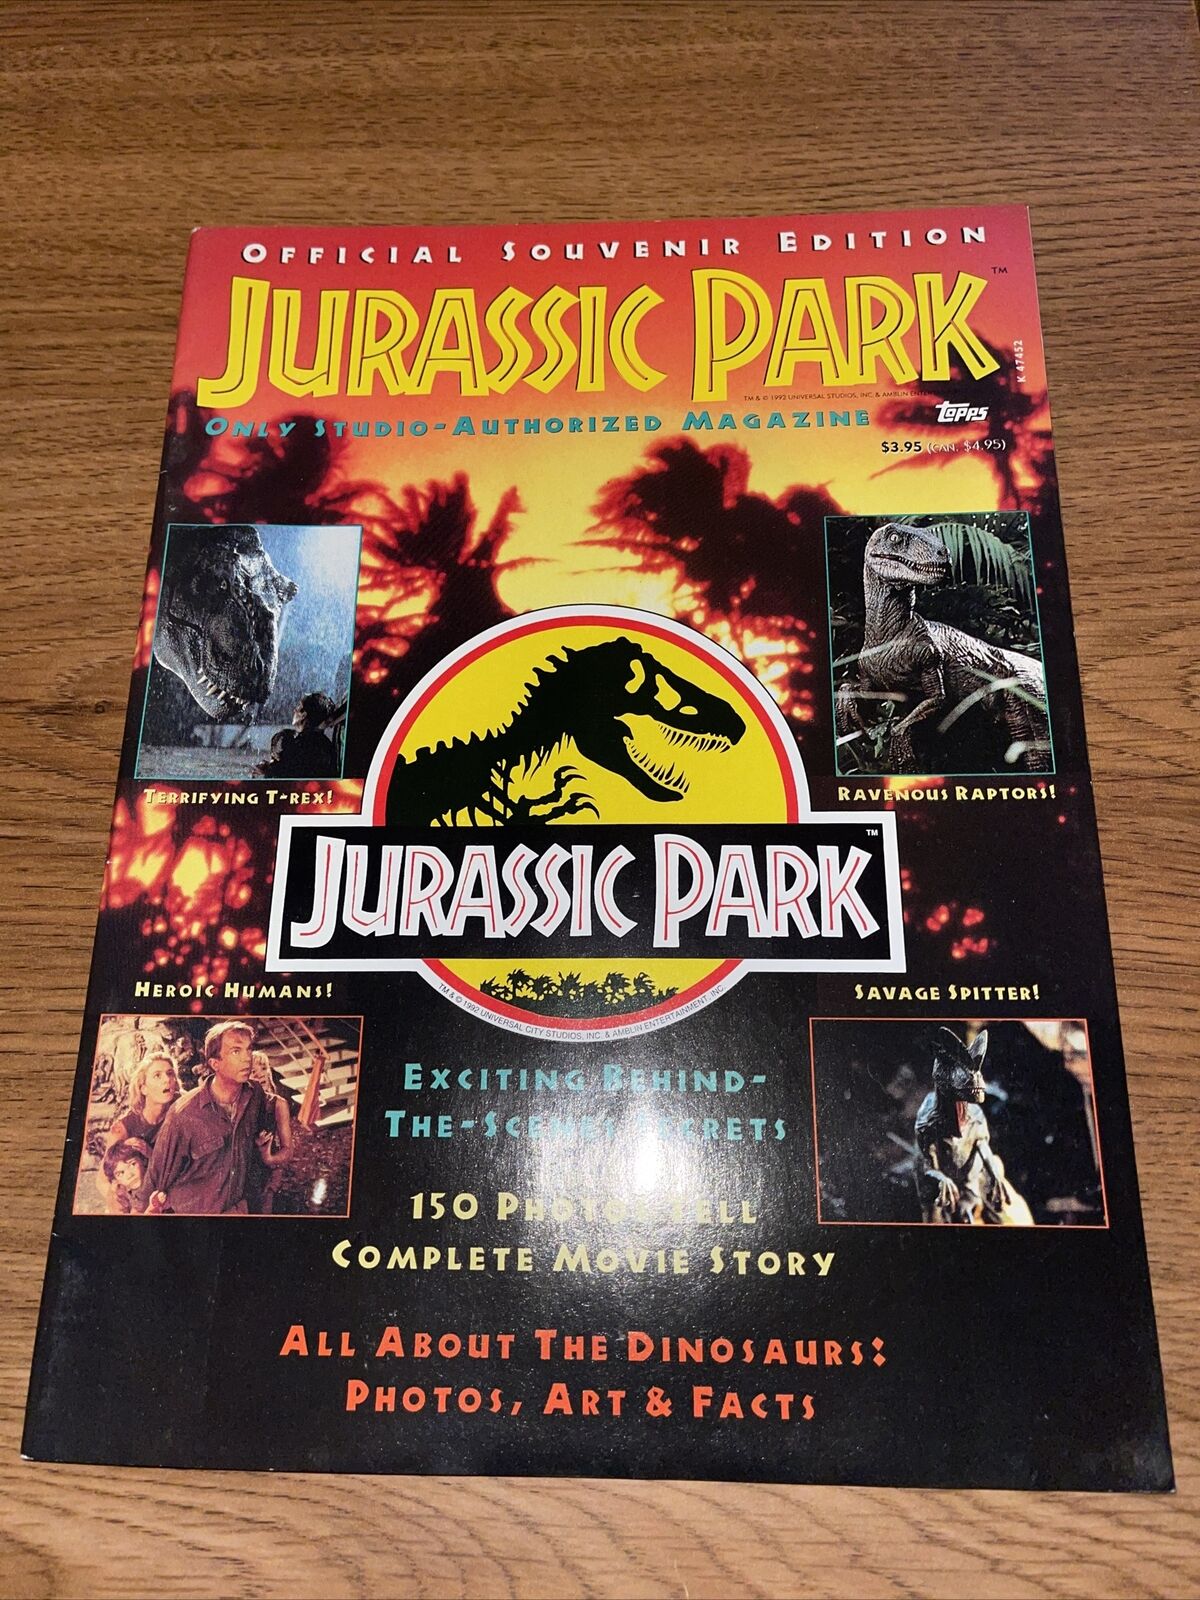 Jurassic Park Magazine 1992 Only Studio-Authorized  Official Souvenir Edition